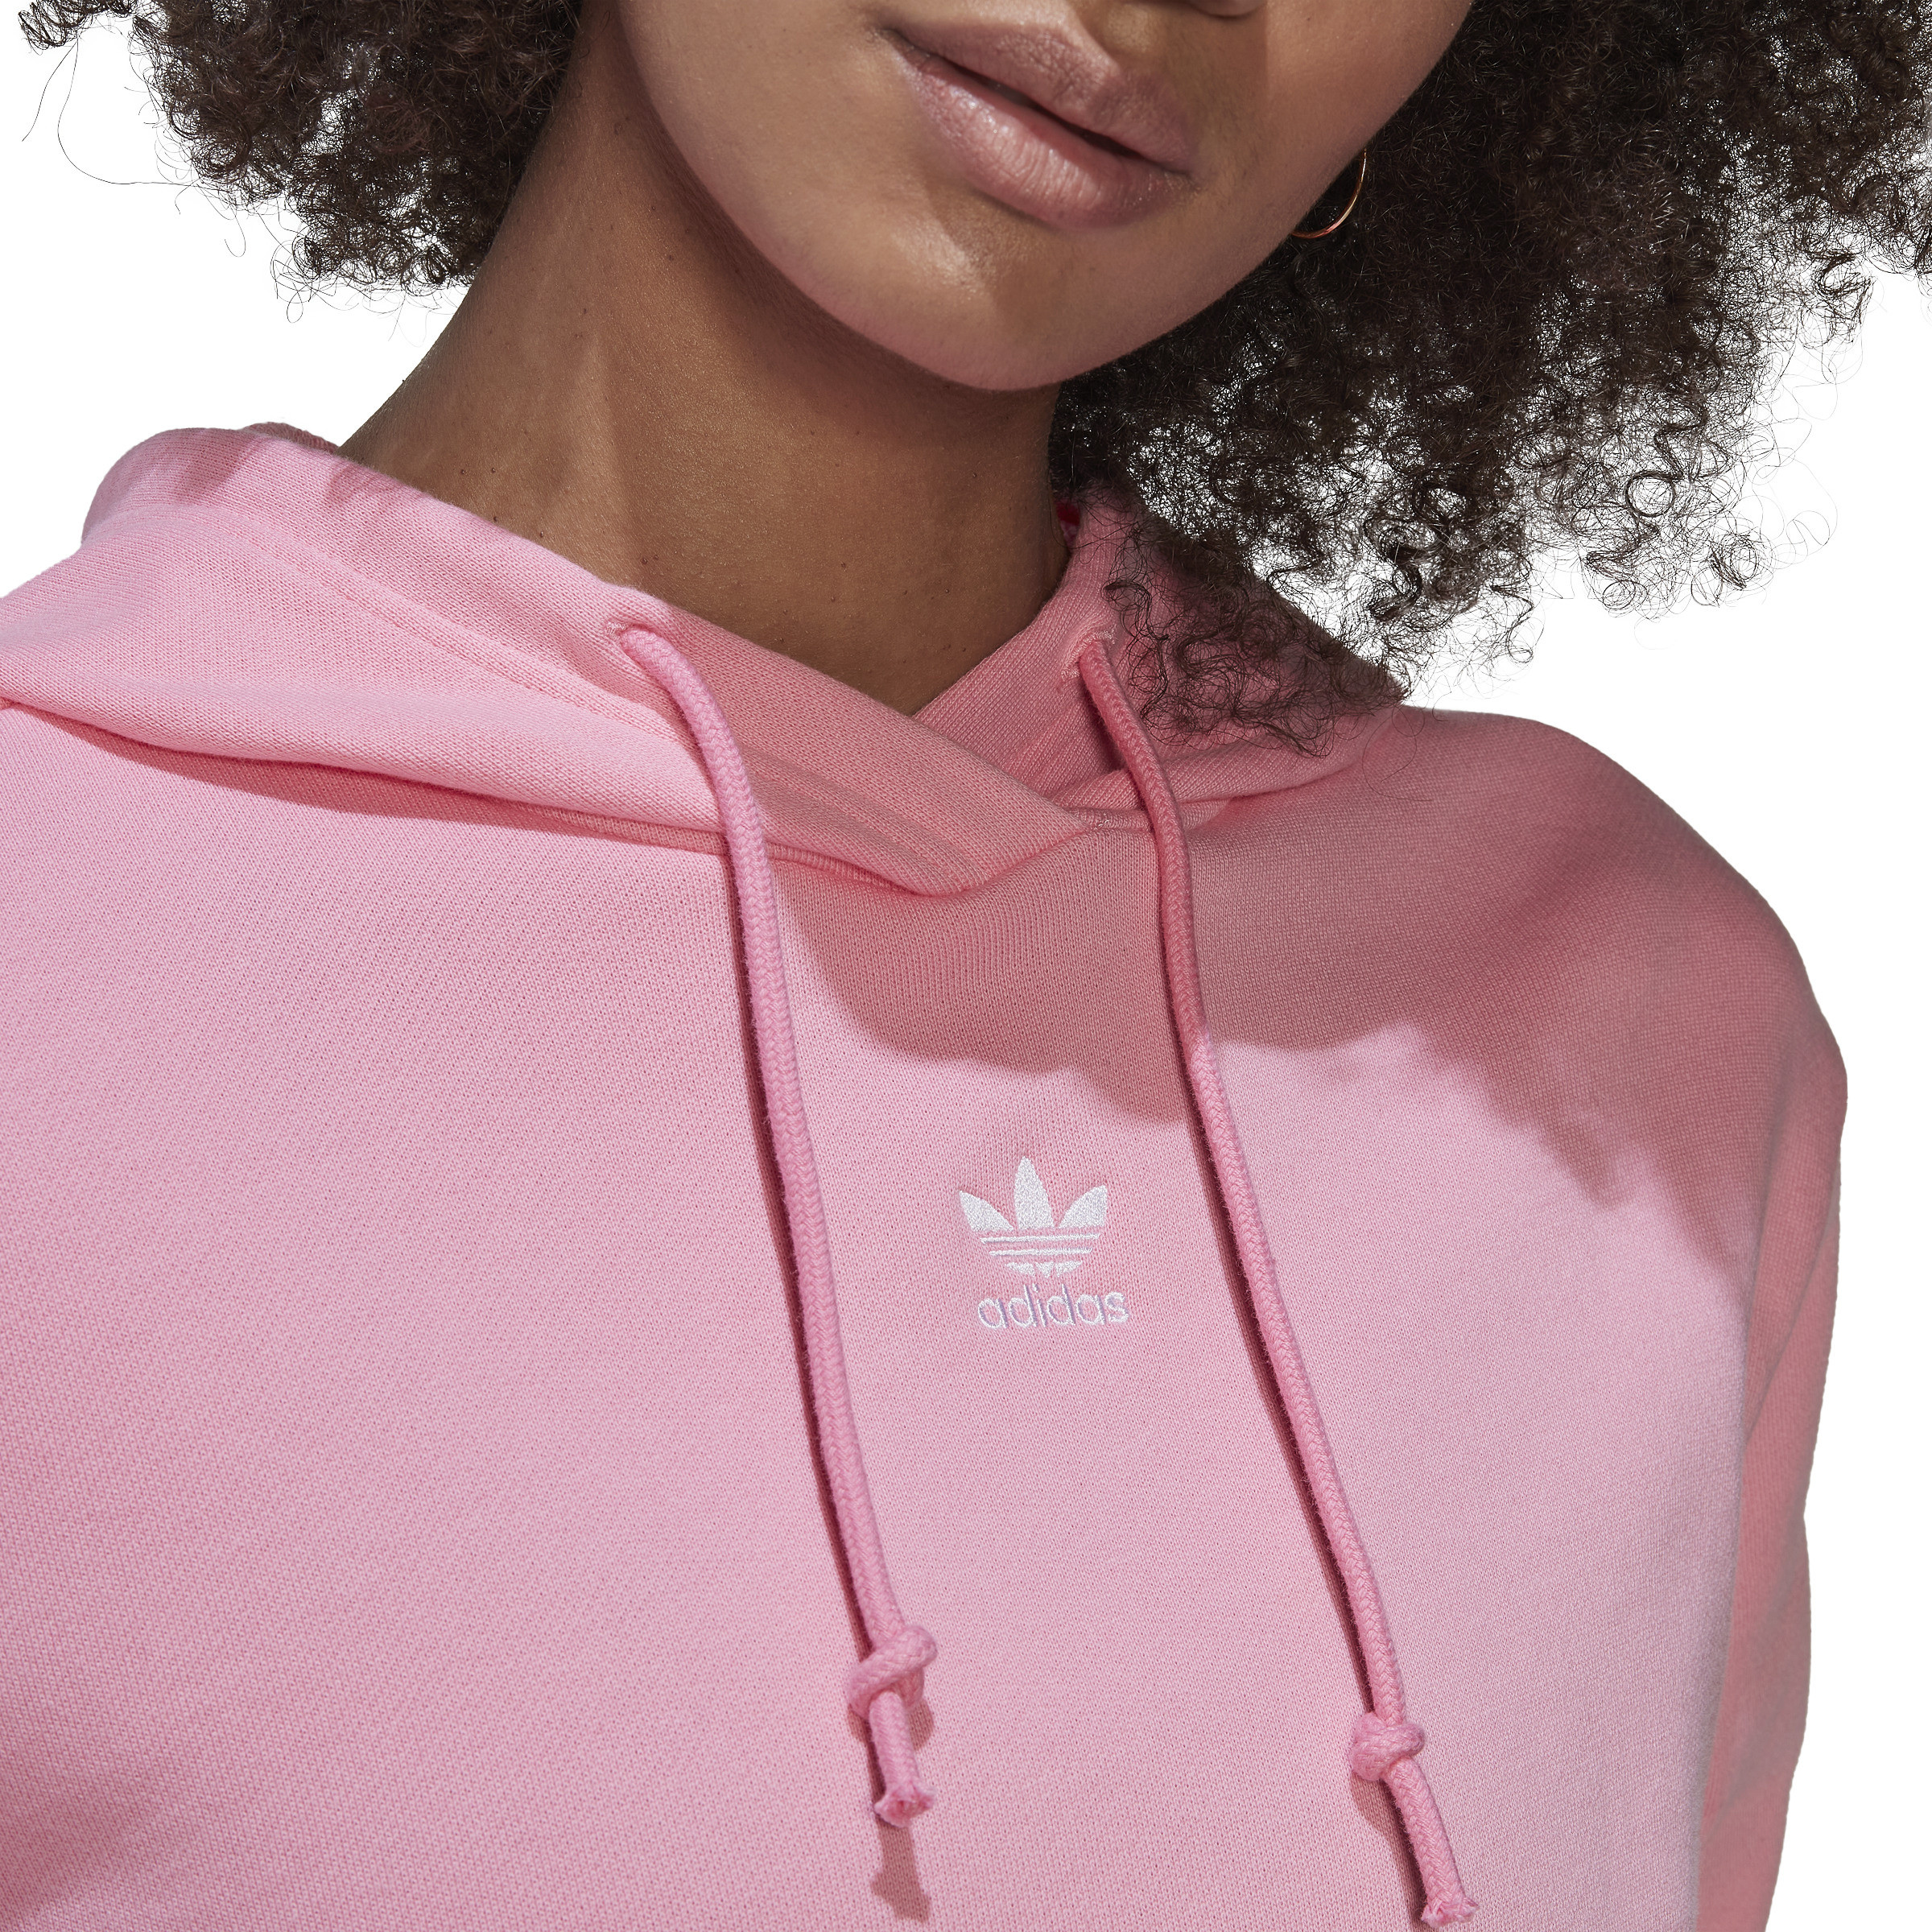 Adidas - Adicolor crop sweatshirt, Pink, large image number 2